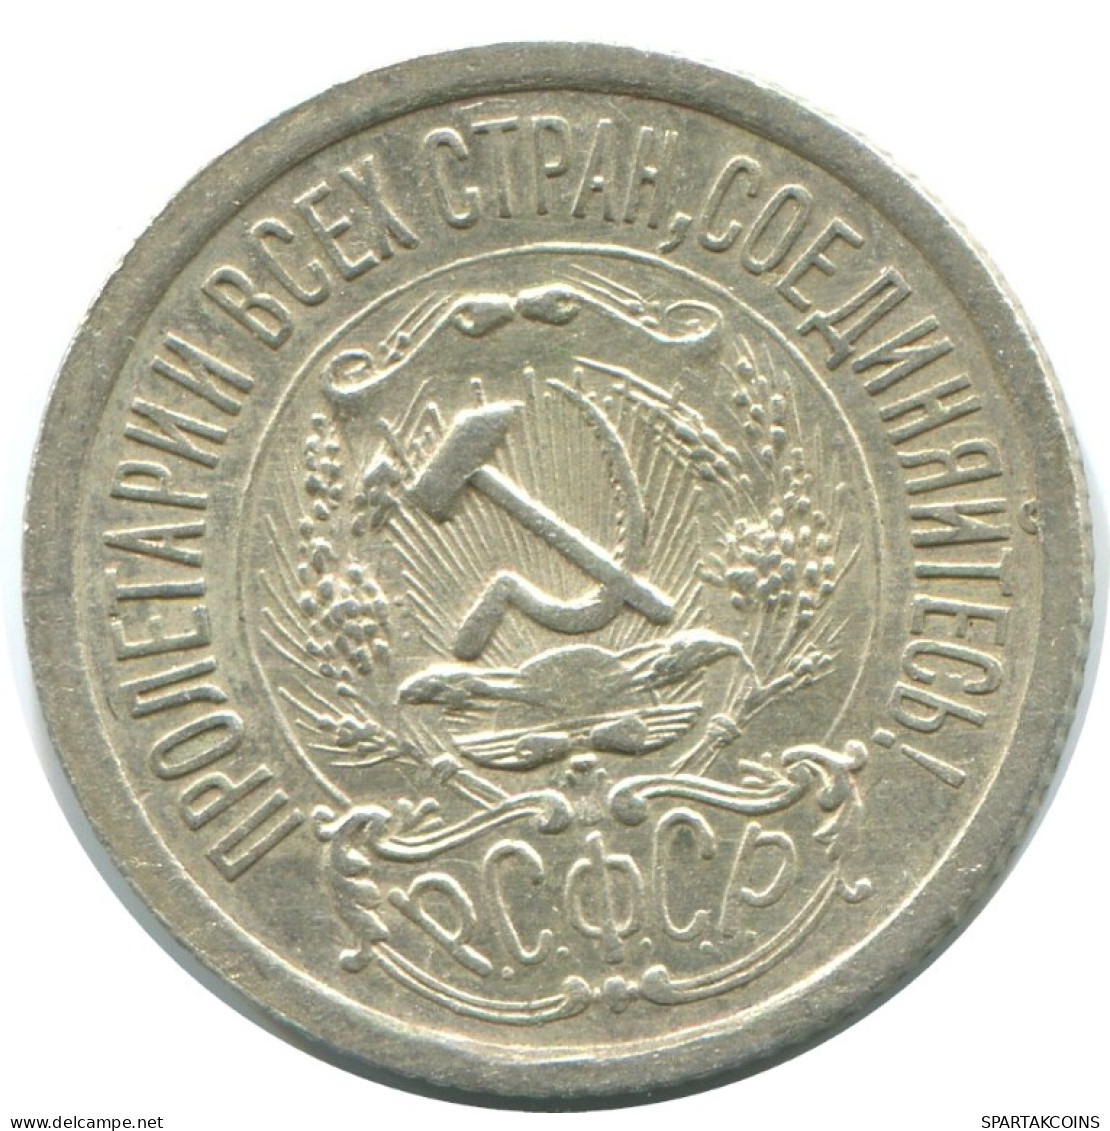 15 KOPEKS 1923 RUSSIA RSFSR SILVER Coin HIGH GRADE #AF046.4.U.A - Russie